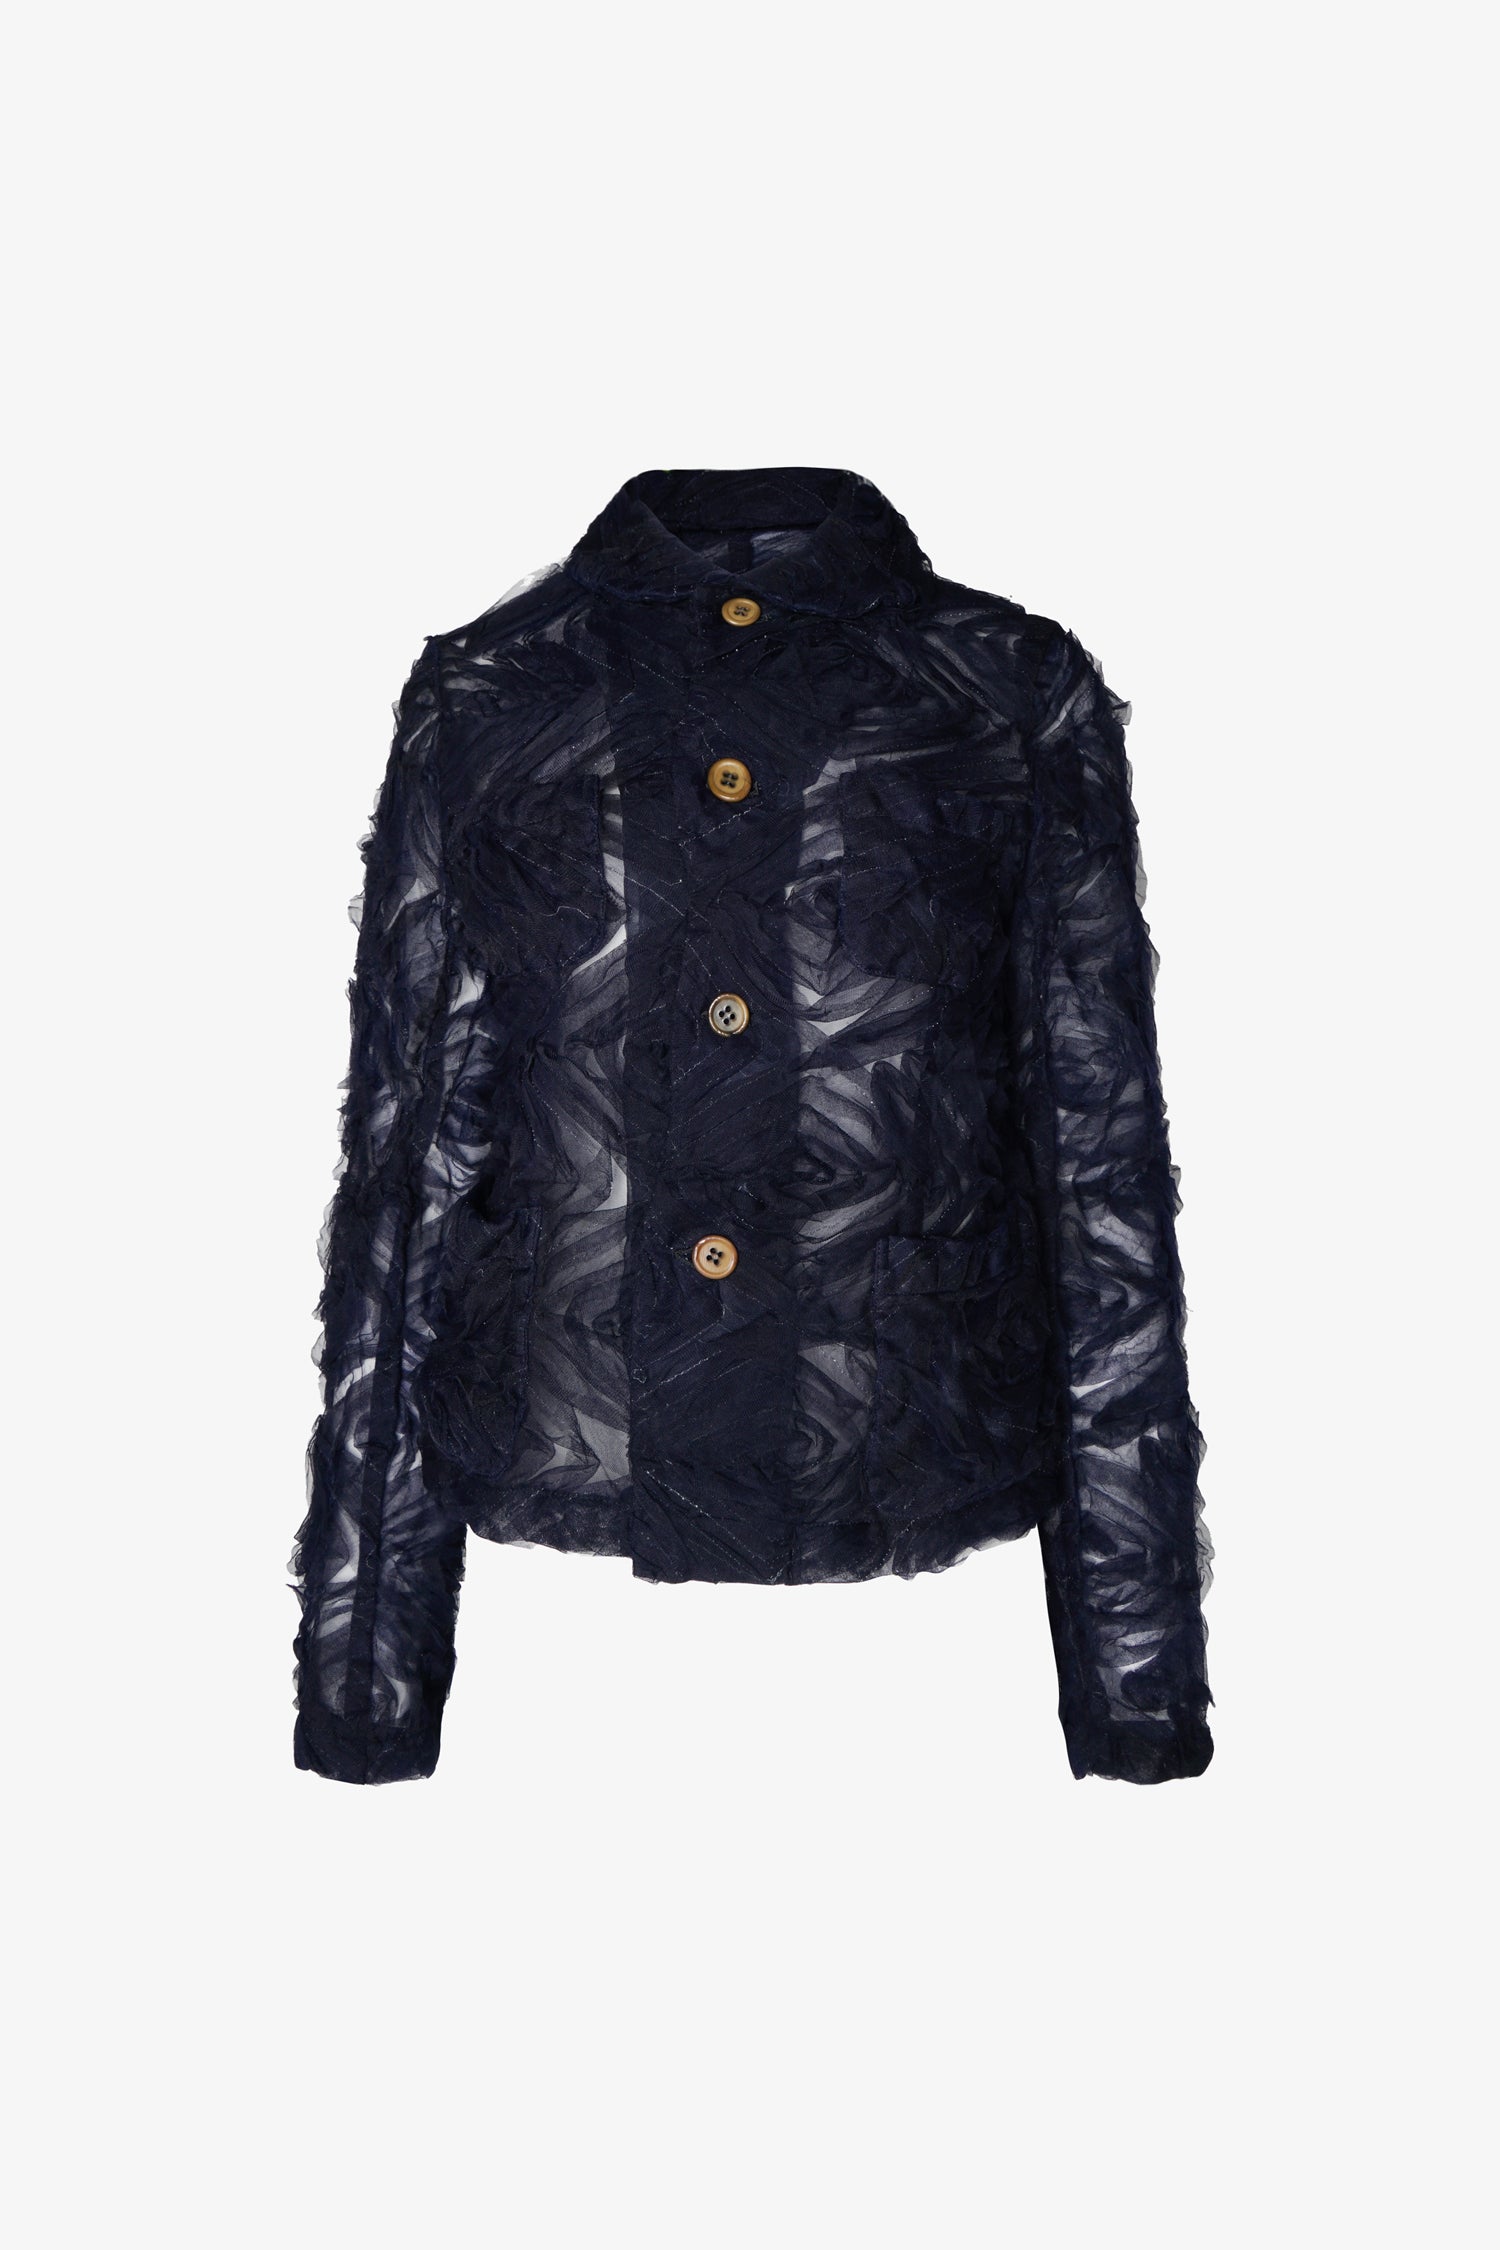 Selectshop FRAME - COMME DES GARÇONS GIRL Semi-Sheer Textured Jacket Outerwear Dubai